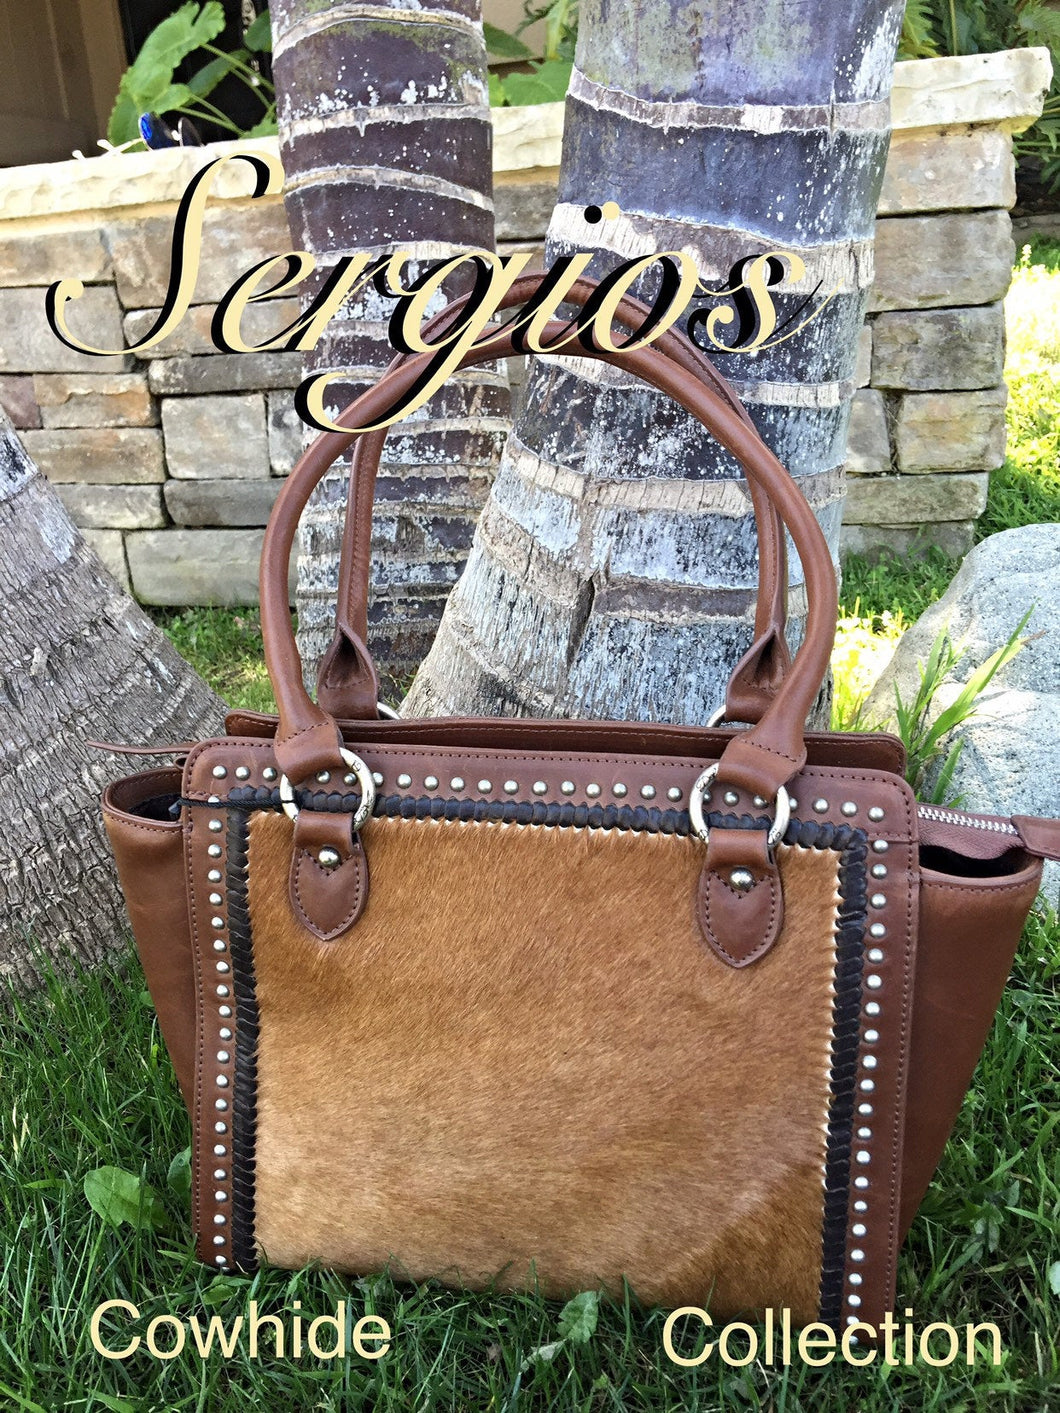 Leather bag/Cowhide purse